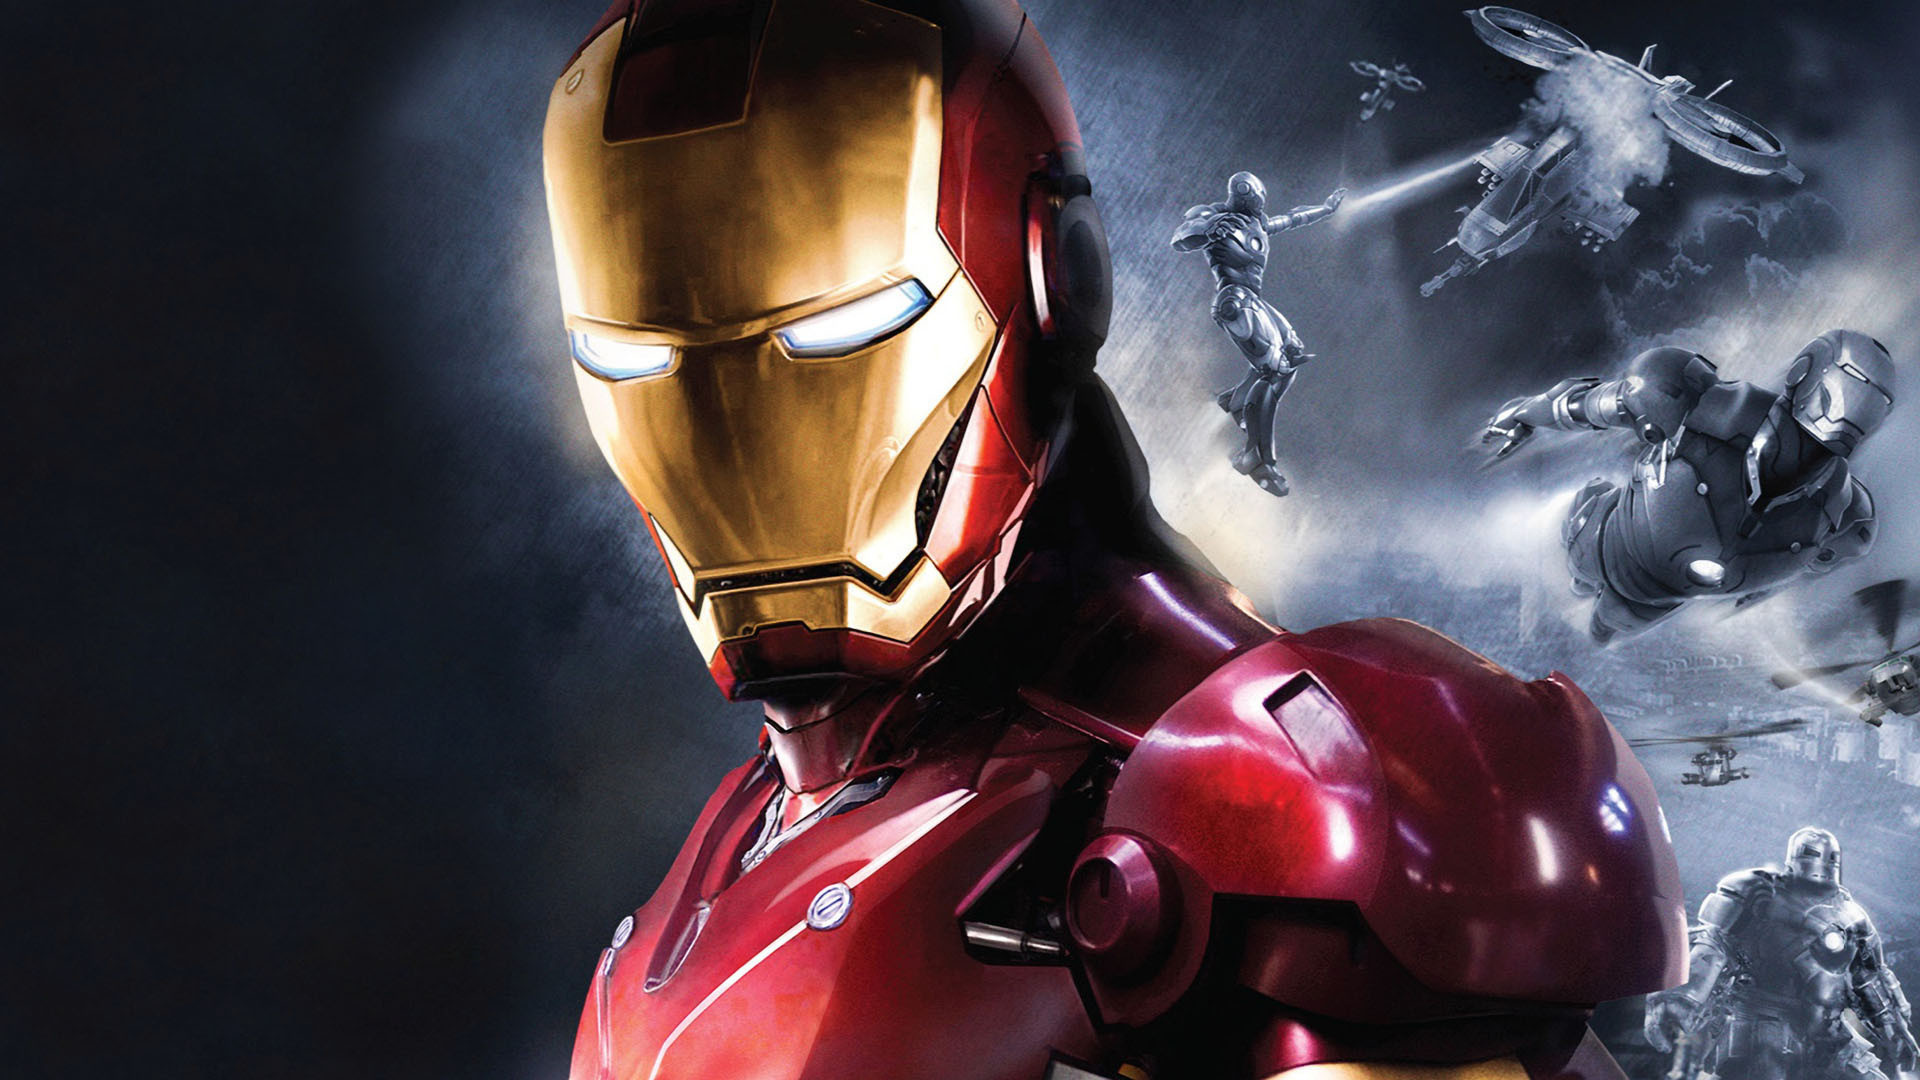 Iron Man Avengers Wallpaper High Quality for Desktop Background ...